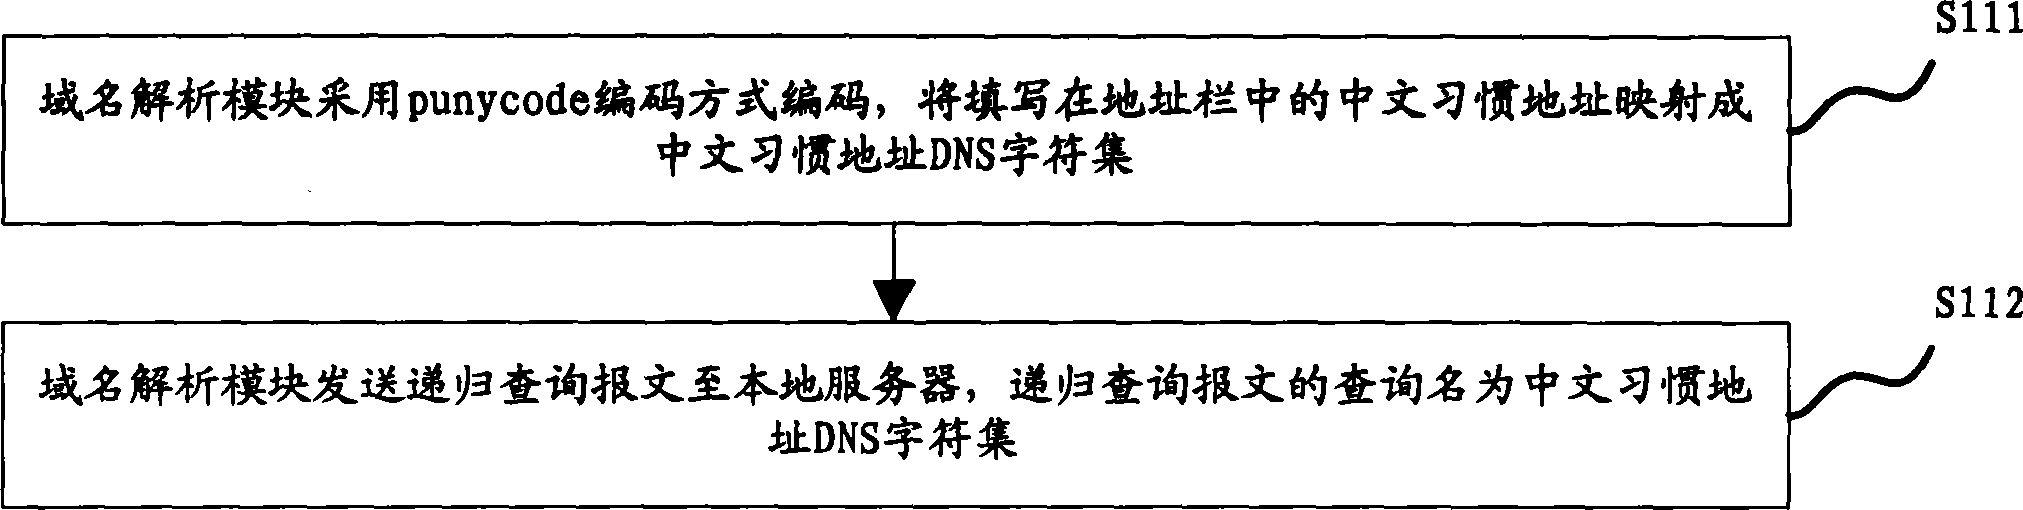 Chinese habit address resolution method